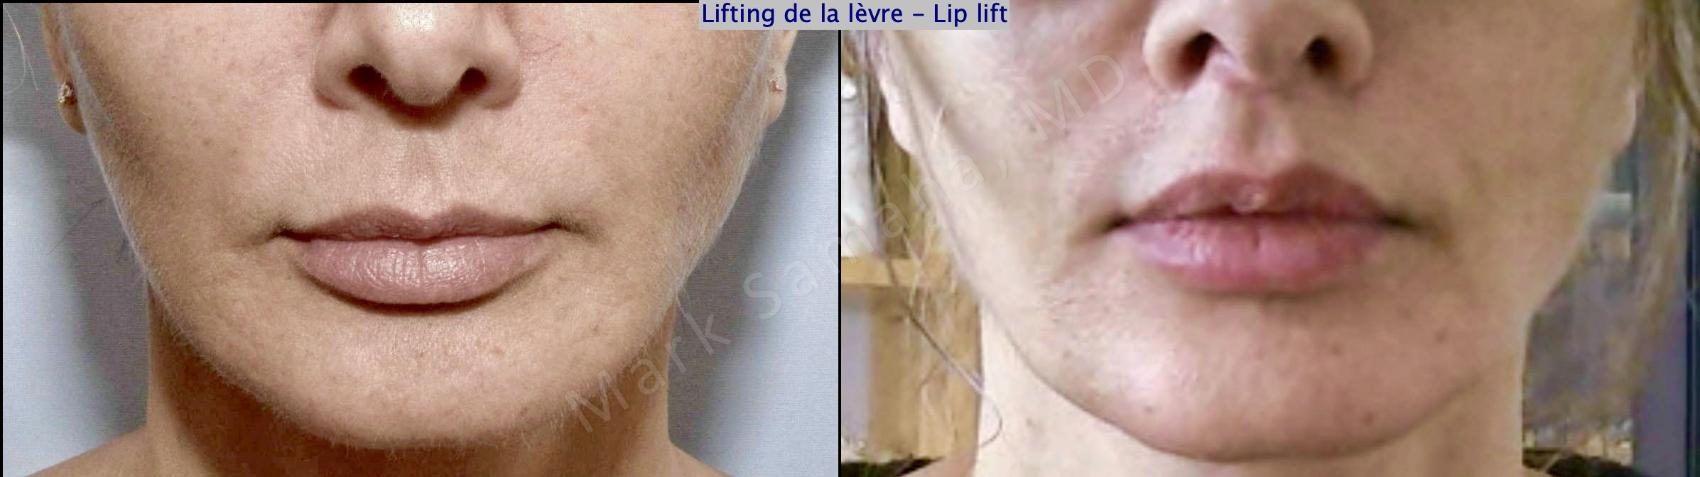 Before & After Lifting de la lèvre supérieure / Lip Lift  Case 178 Front View in Montreal, QC